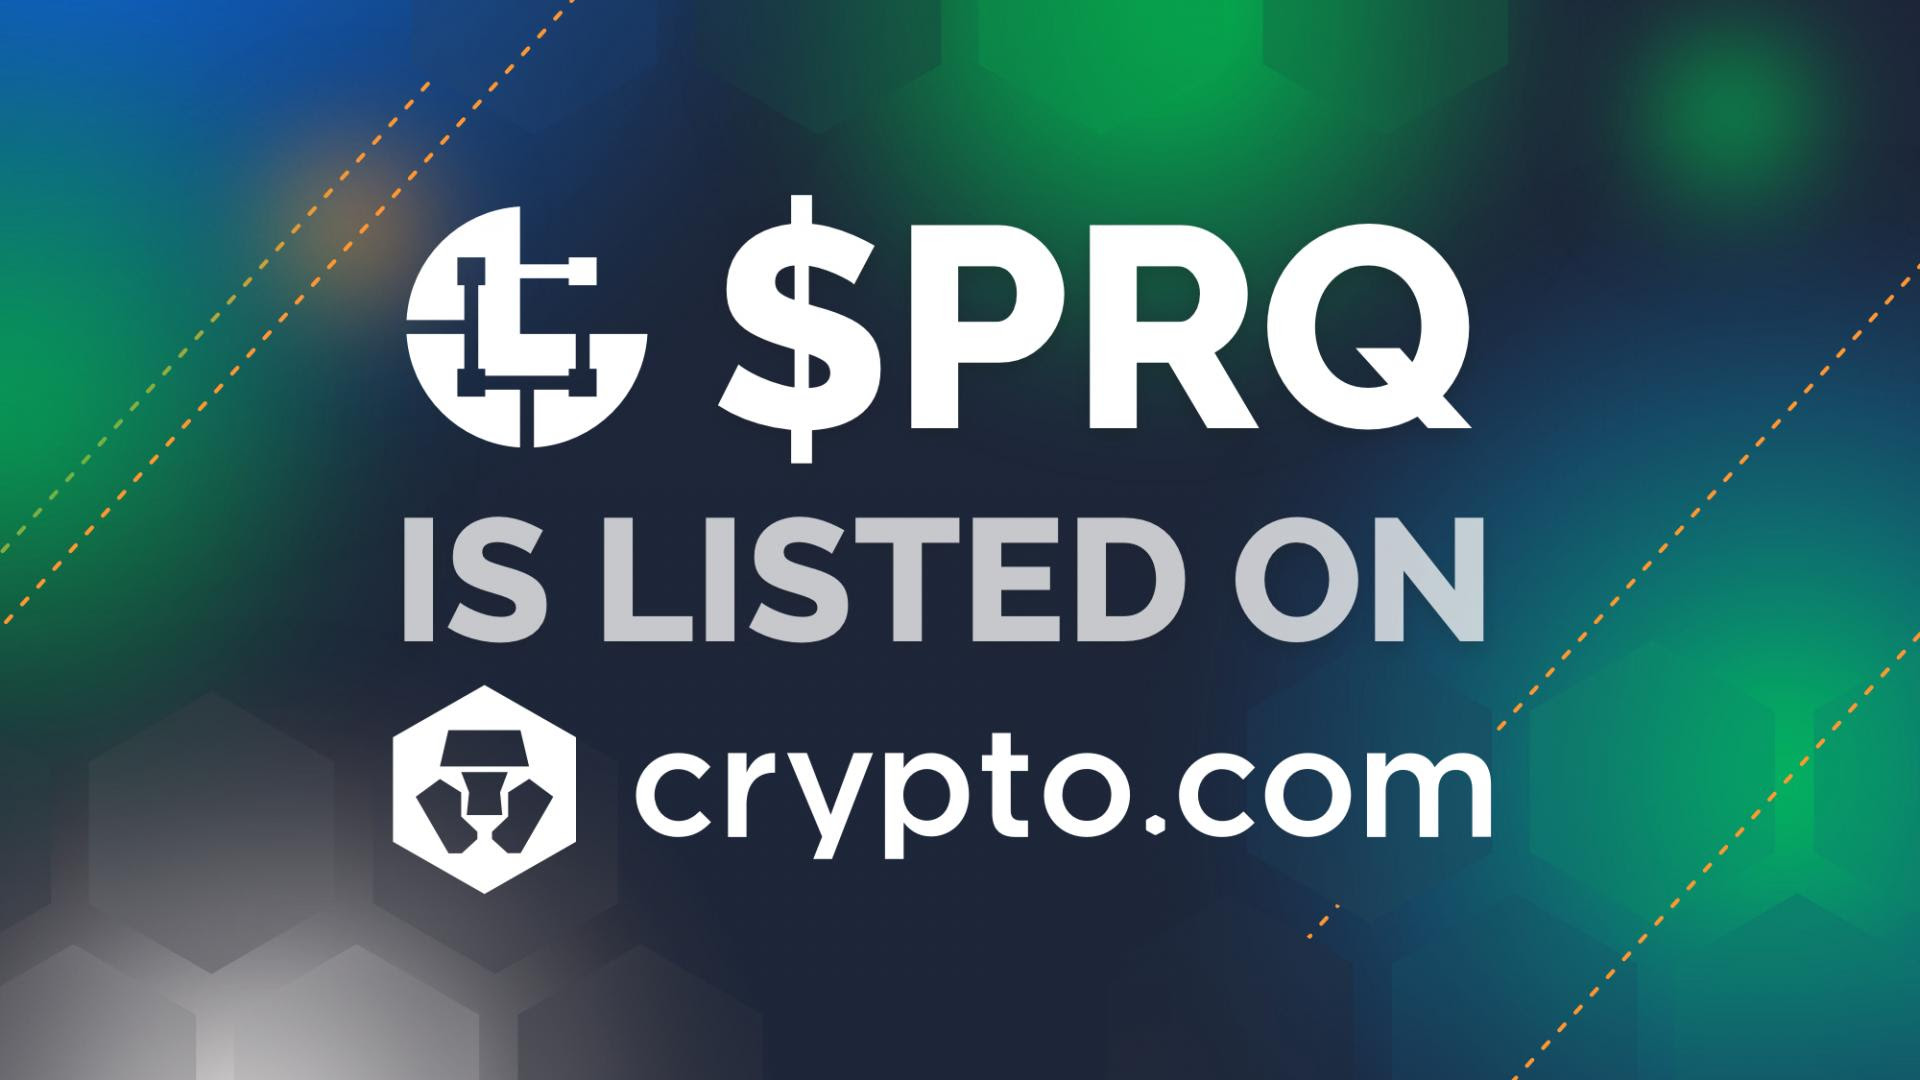 PARSIQ ($PRQ) Announces Listing On Crypto.com